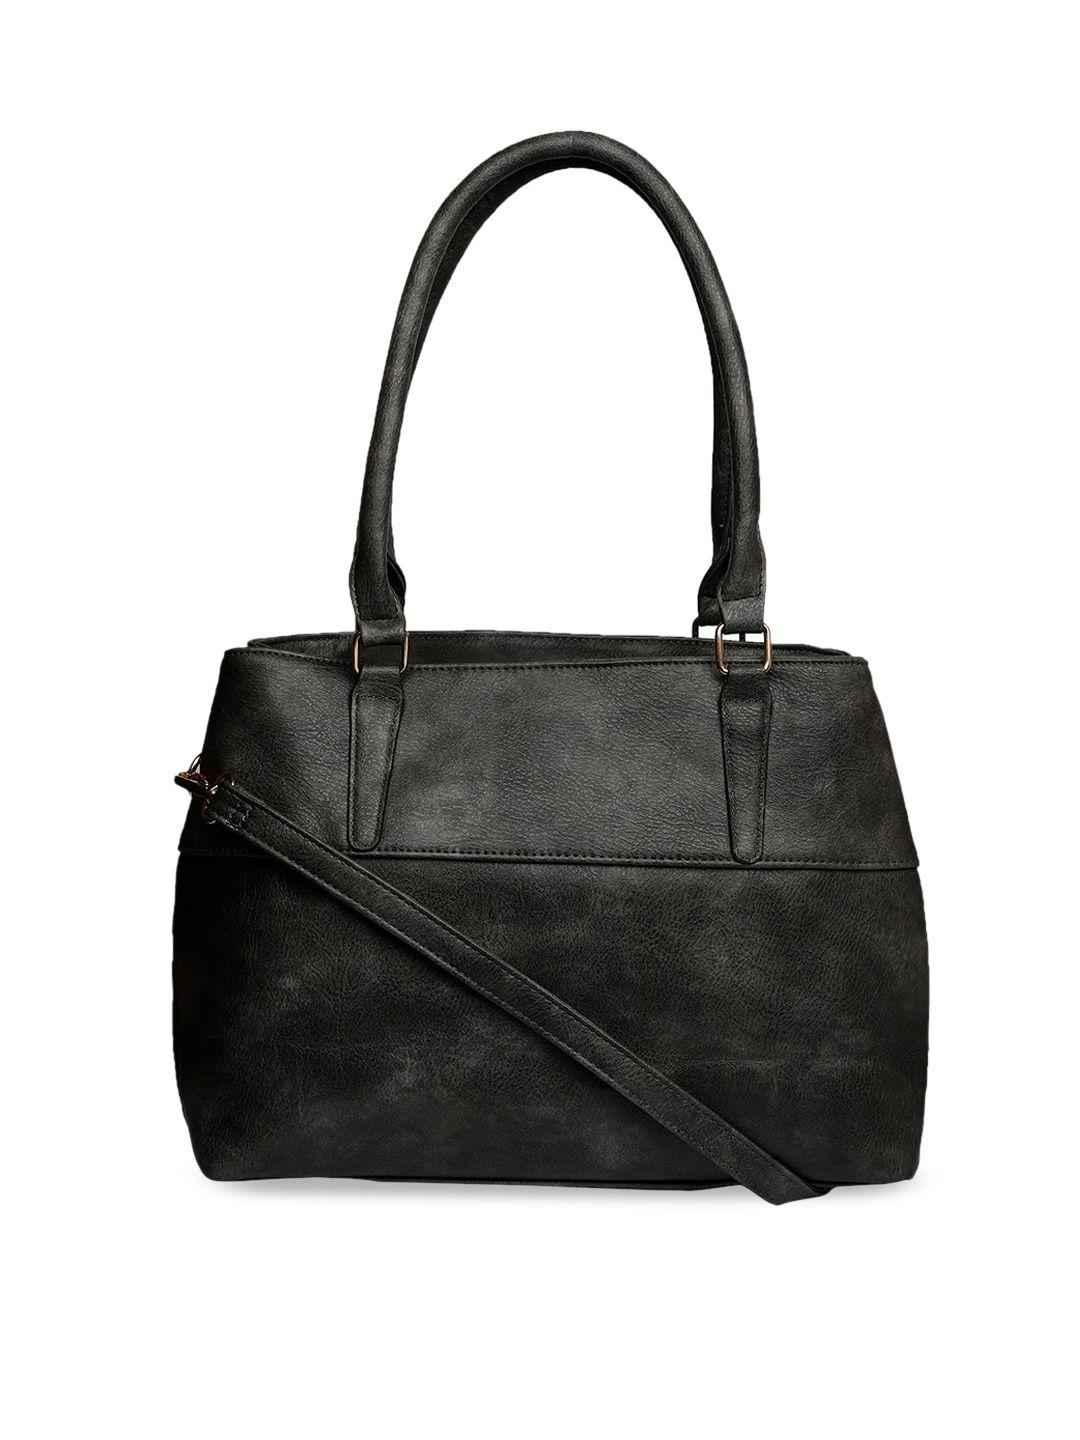 marie claire black textured structured shoulder bag